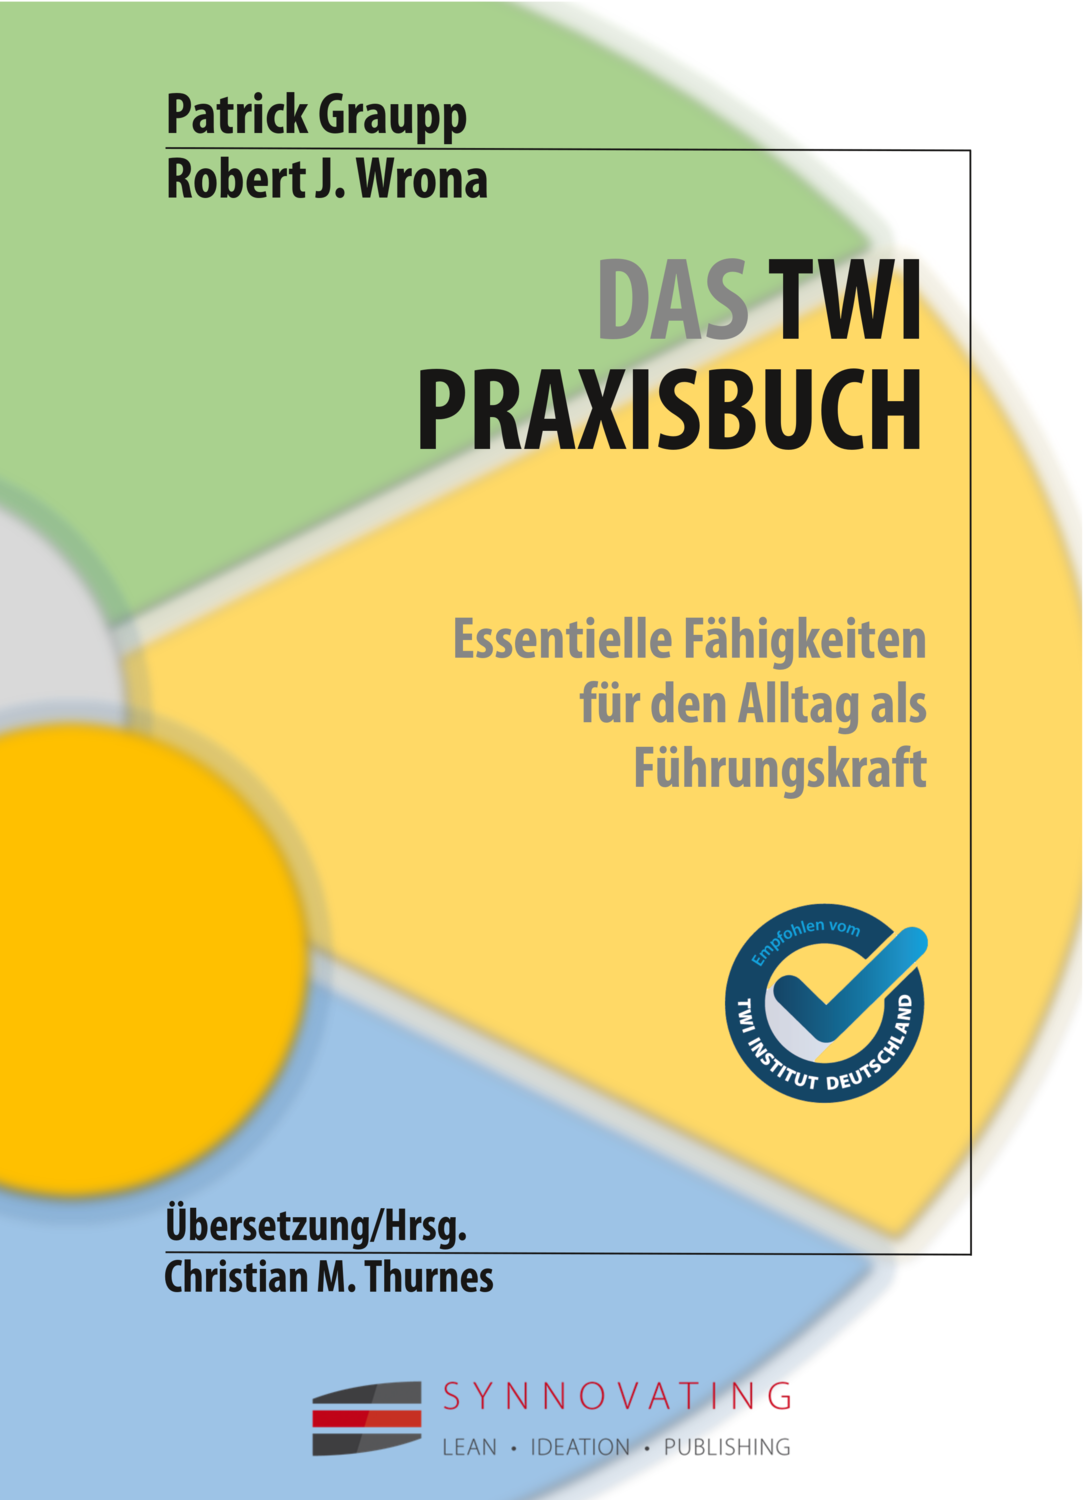 Graupp/Wrona/Thurnes:
Das TWI-Praxisbuch